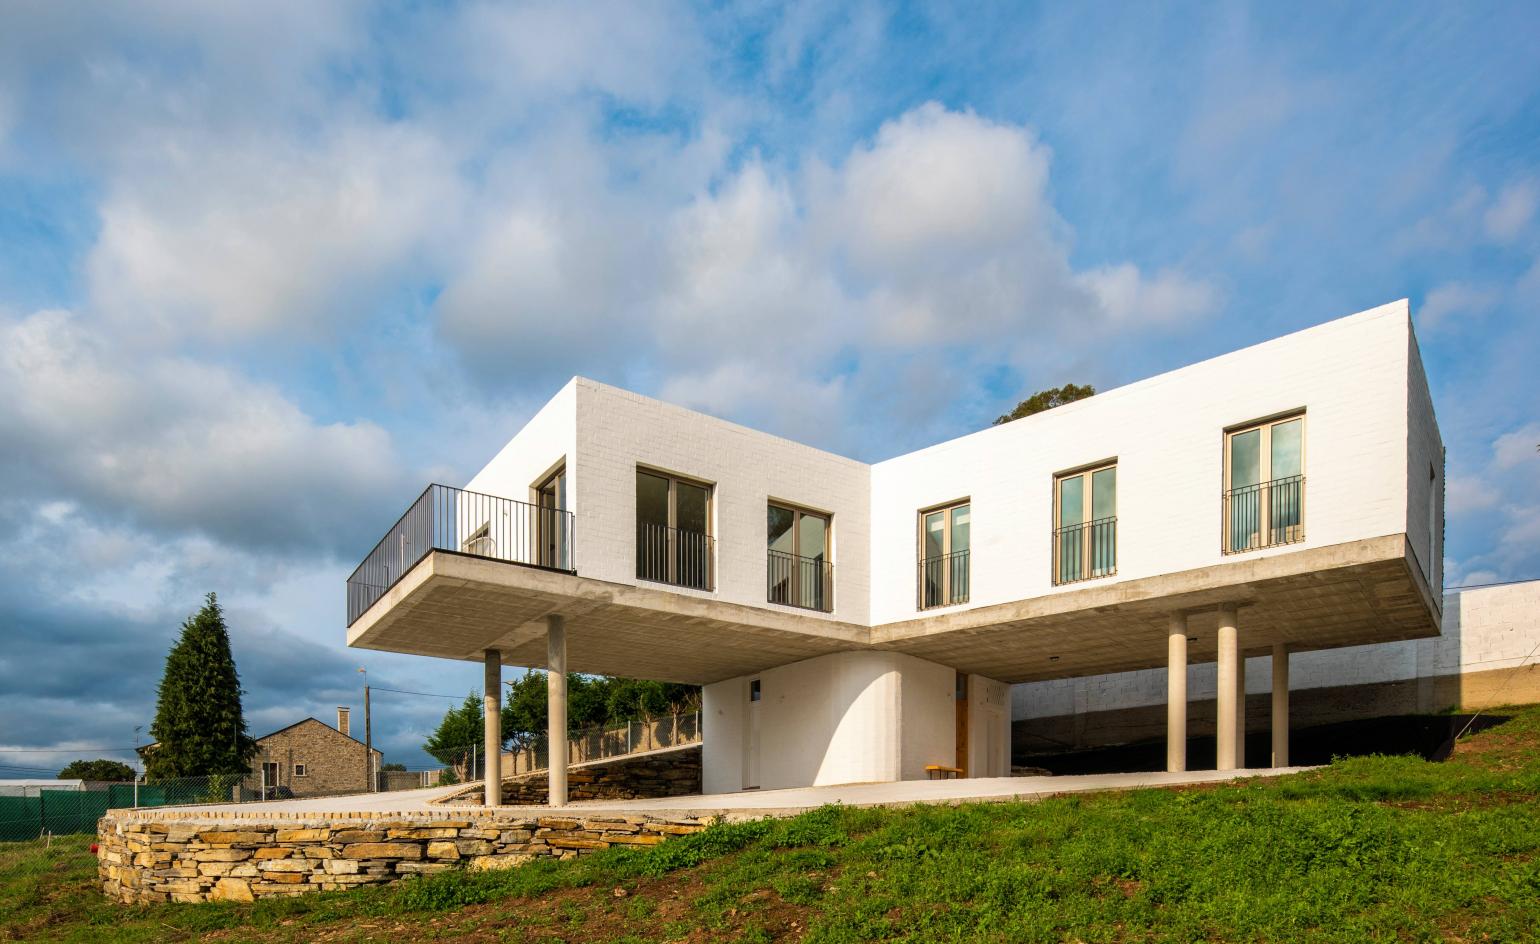 The Hórreo House stands on concrete pilotis